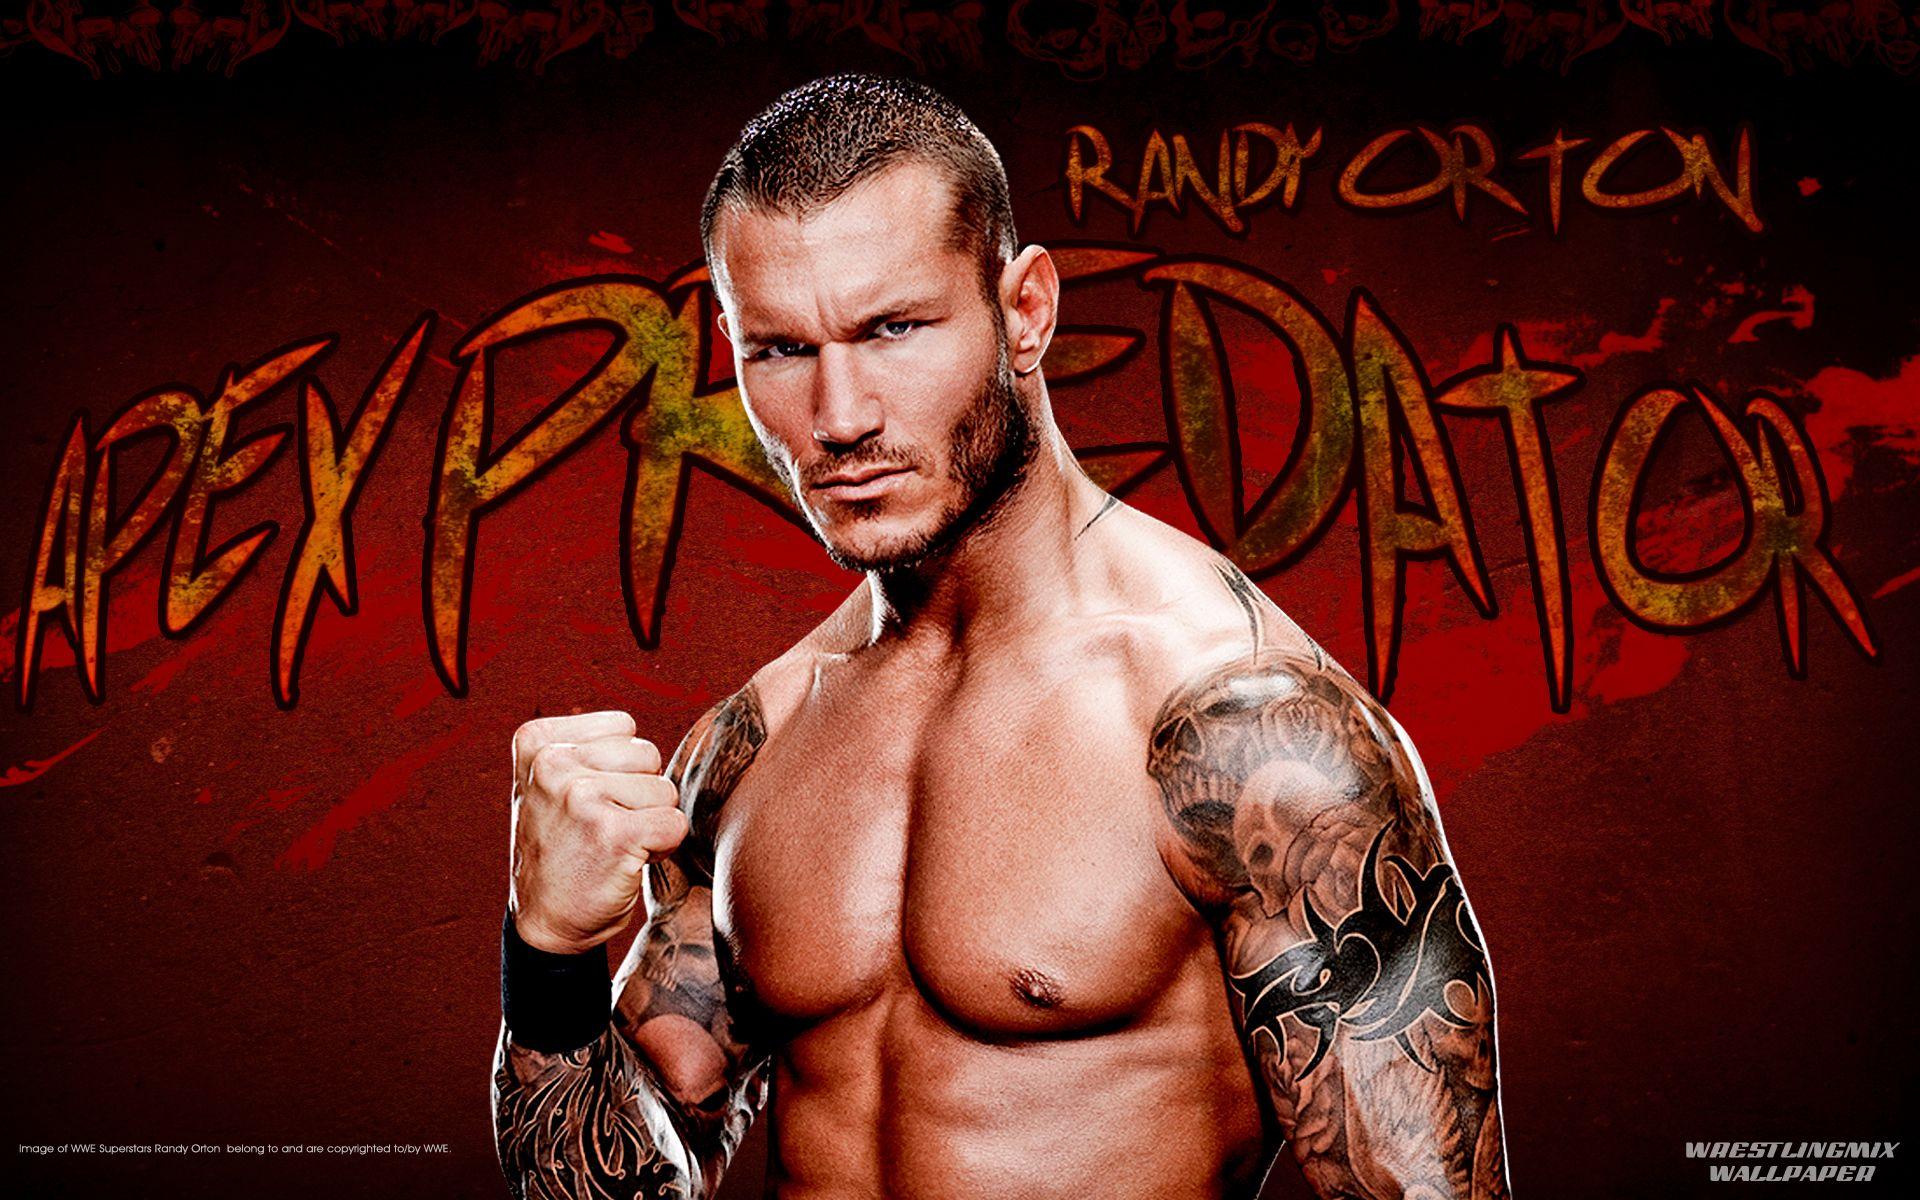 WWE Randy Orton Wallpaper, 45 WWE Randy Orton Image for Free.